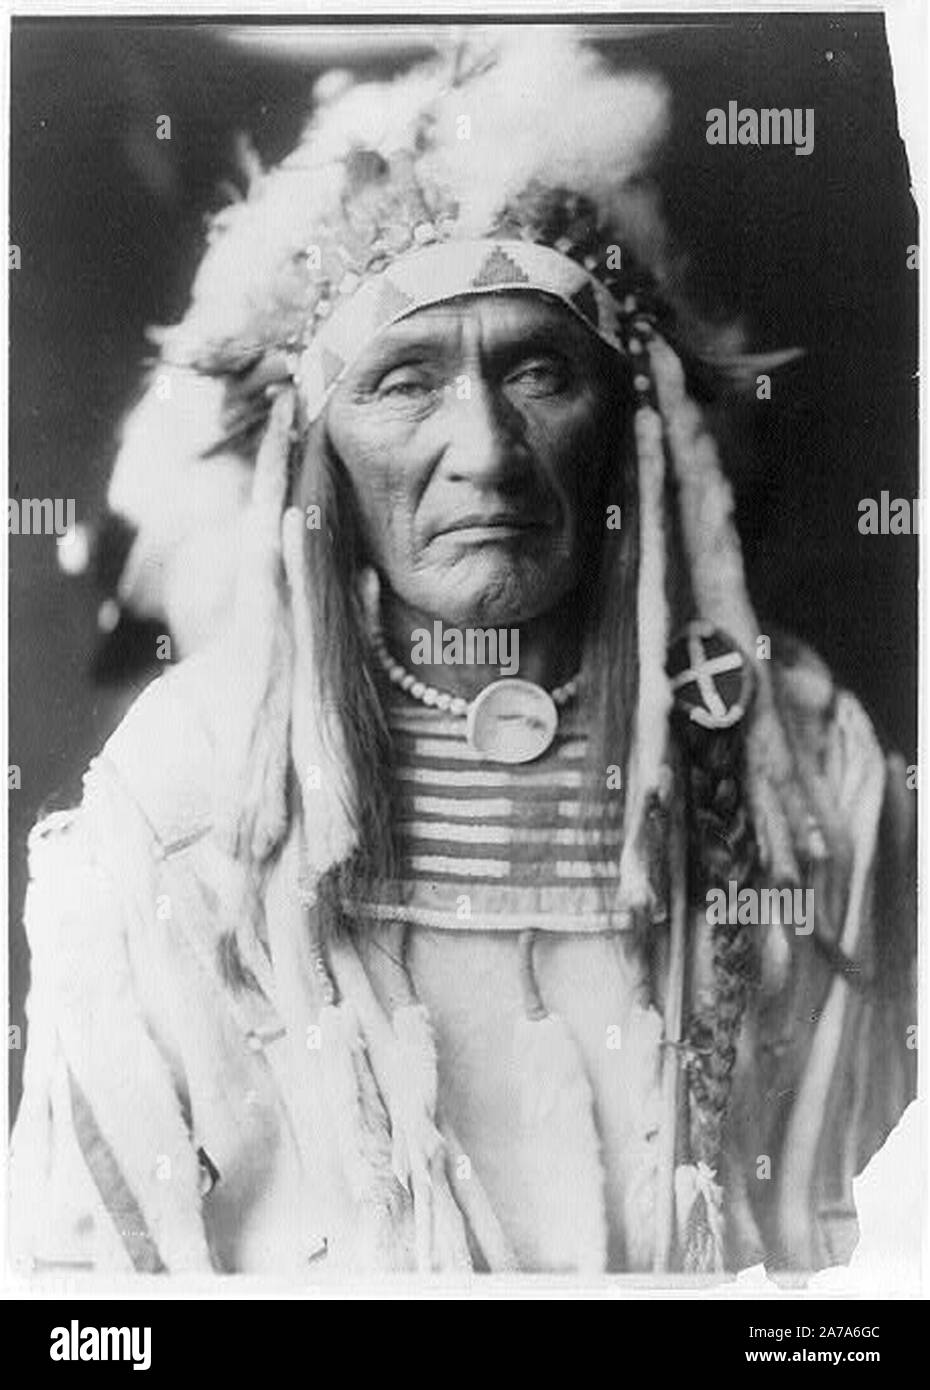 Vintage native american indian portrait photograph Stock Photo - Alamy